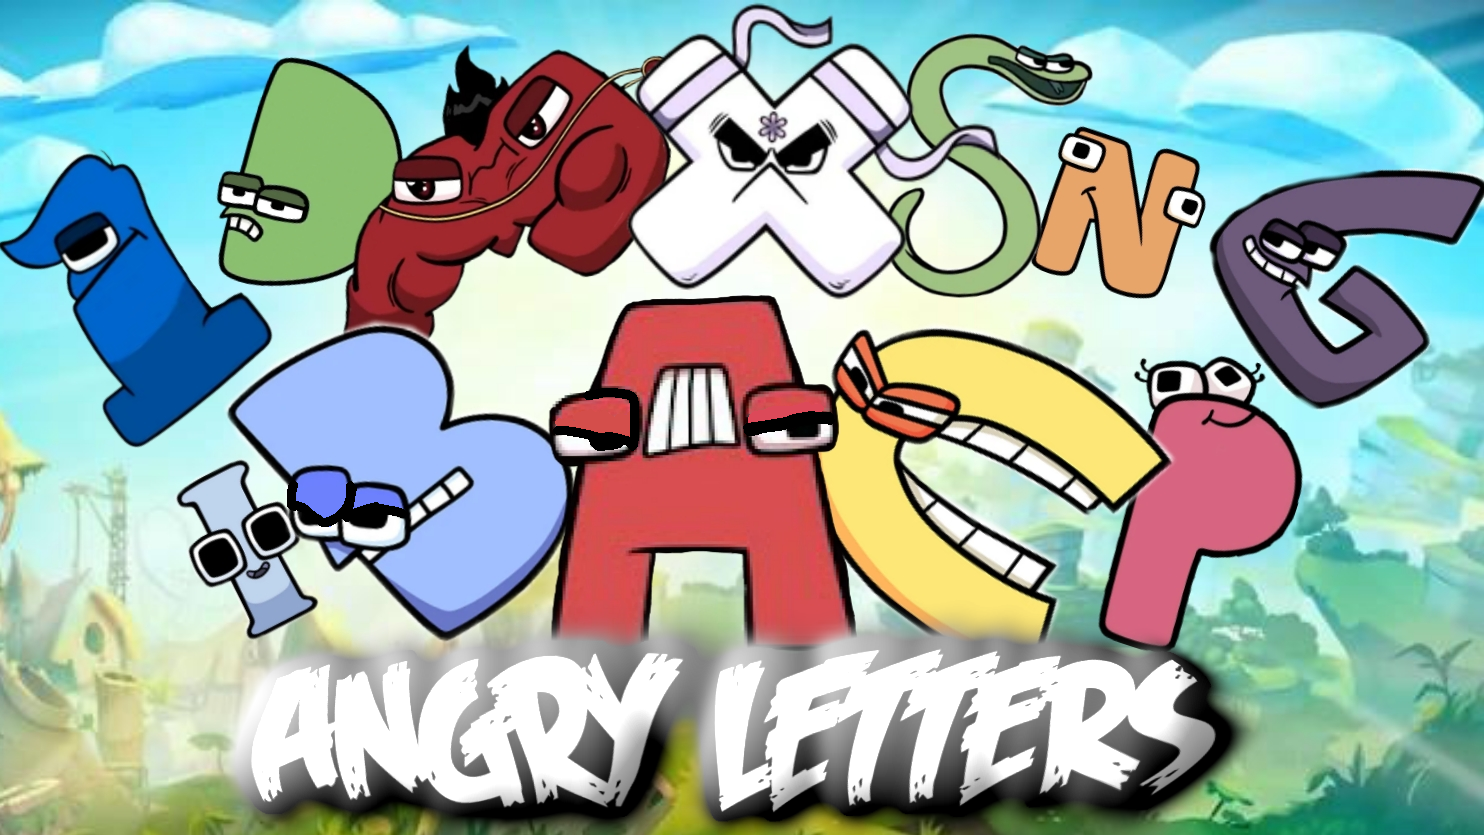 Replying to @alphabet lore maker yo #angrybirds